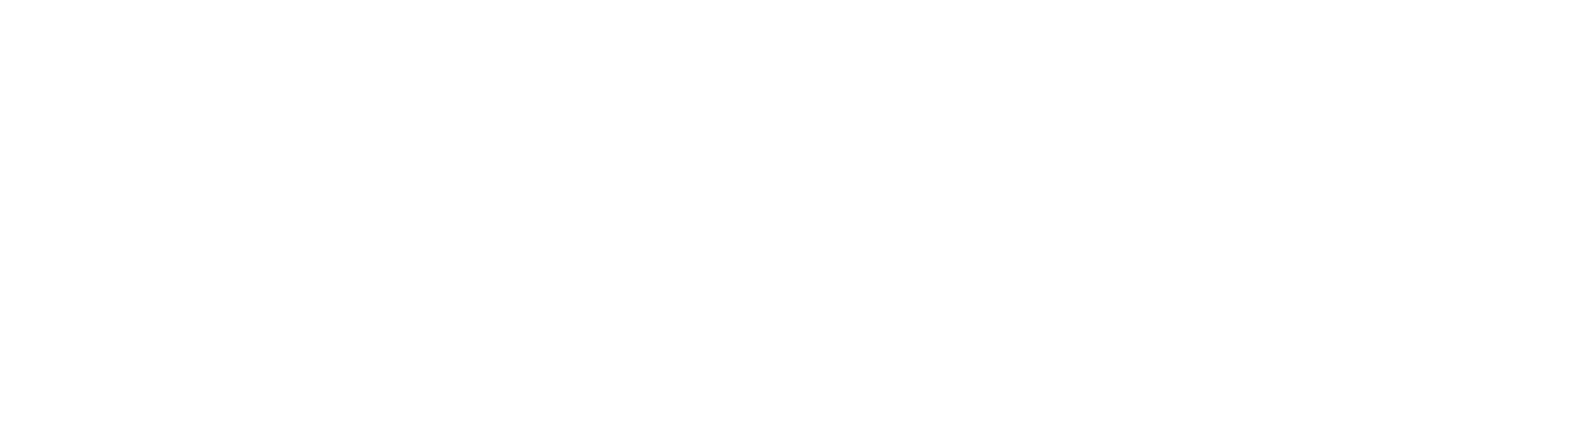 Gamesparcs Logo groß für dunkle Hintergründe (transparentes PNG)